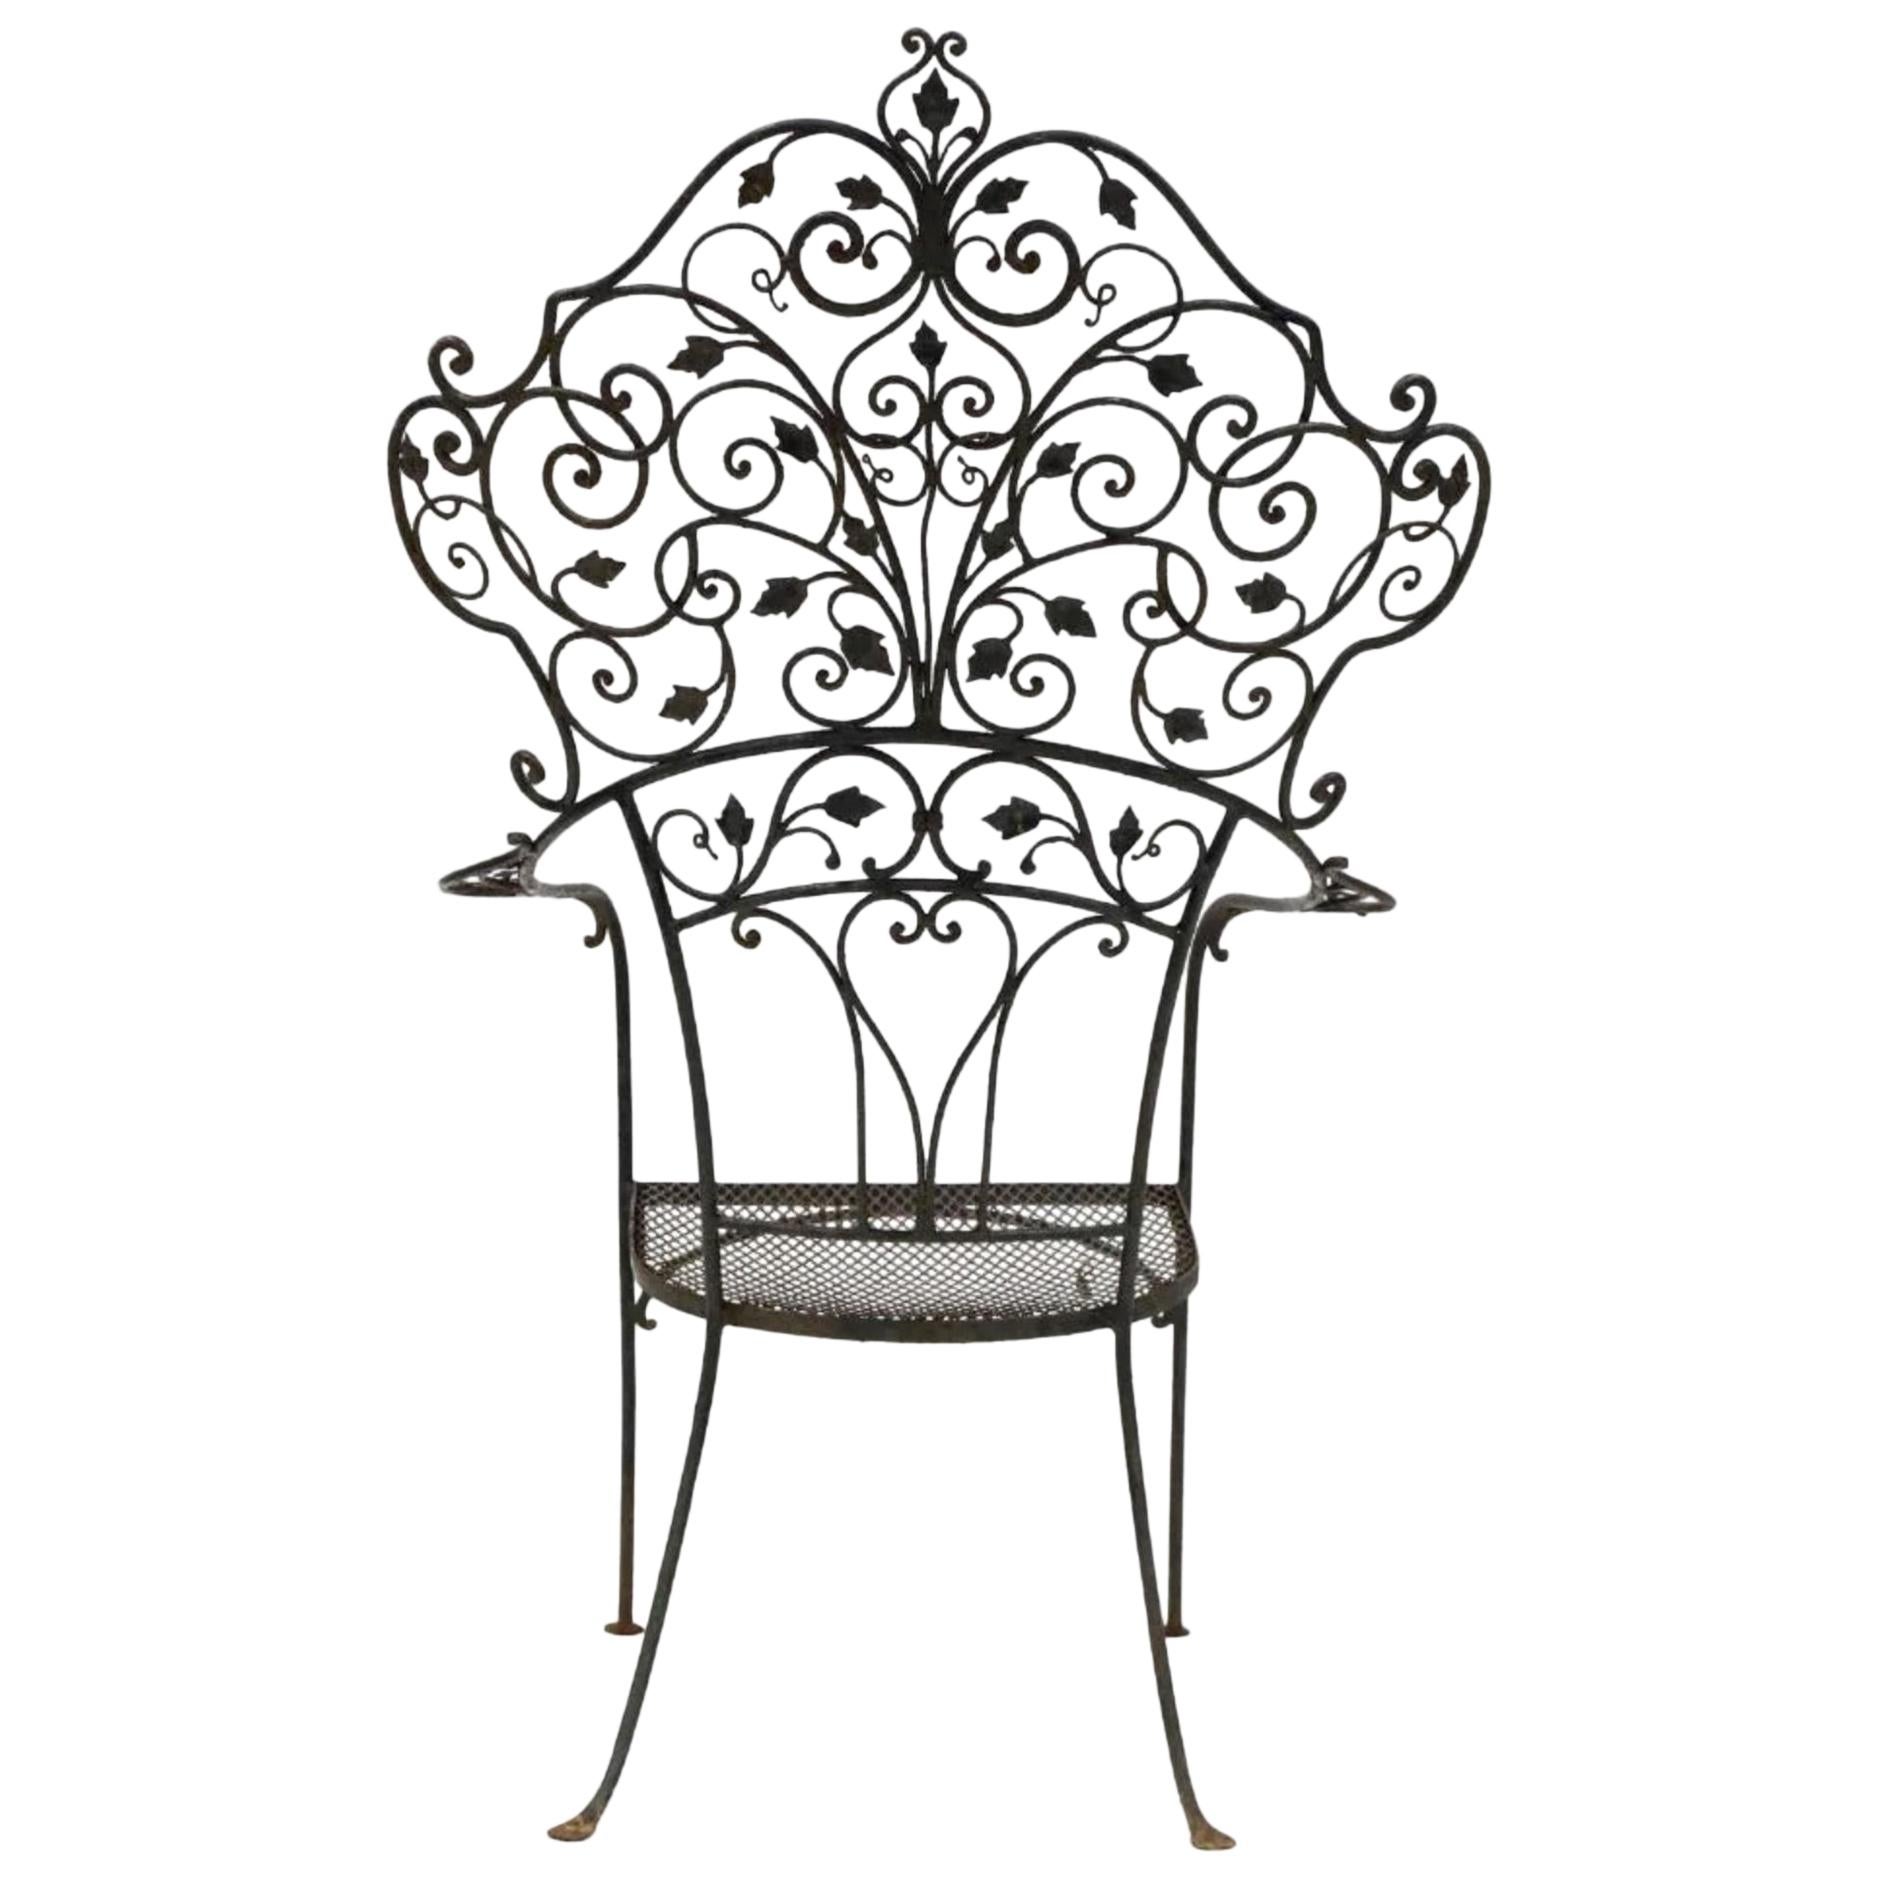 1920s Vintage Wrought Iron Garden Throne Chair